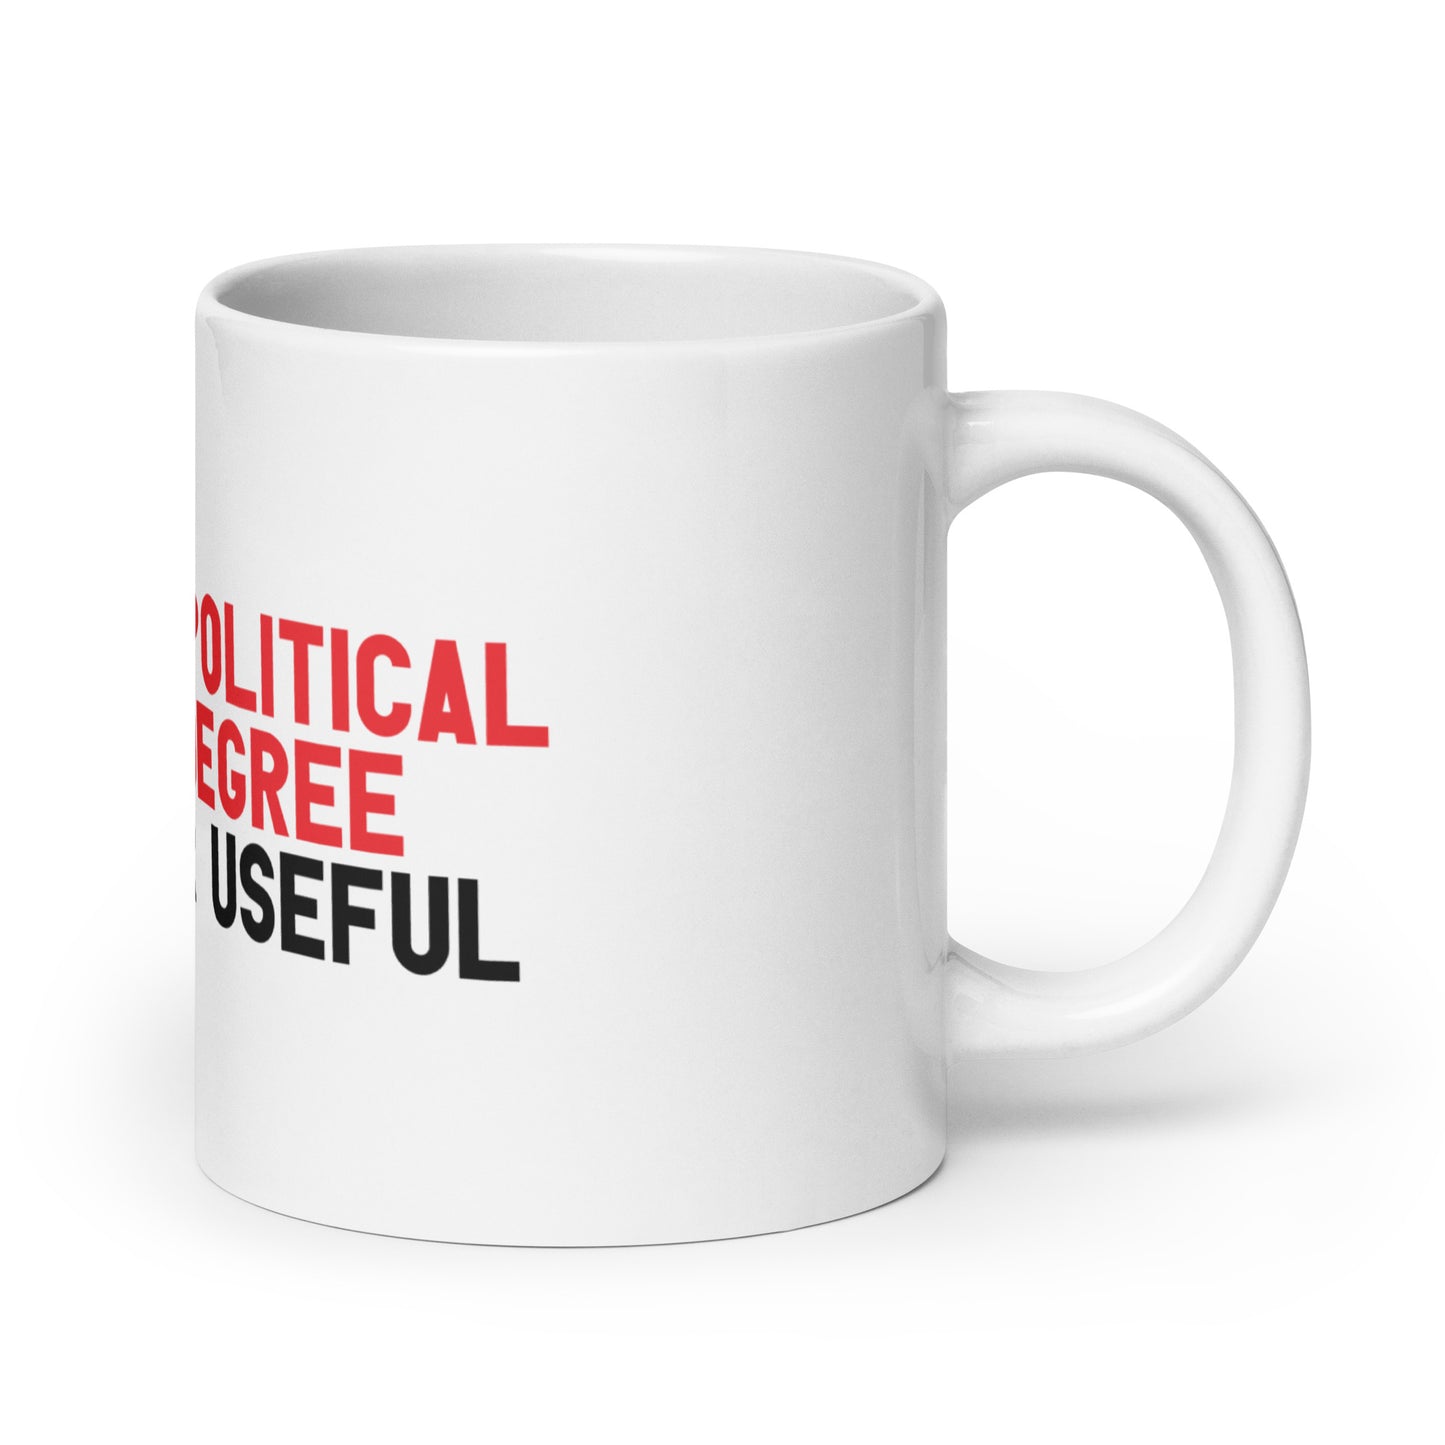 The "U" in Political Science Degree mug